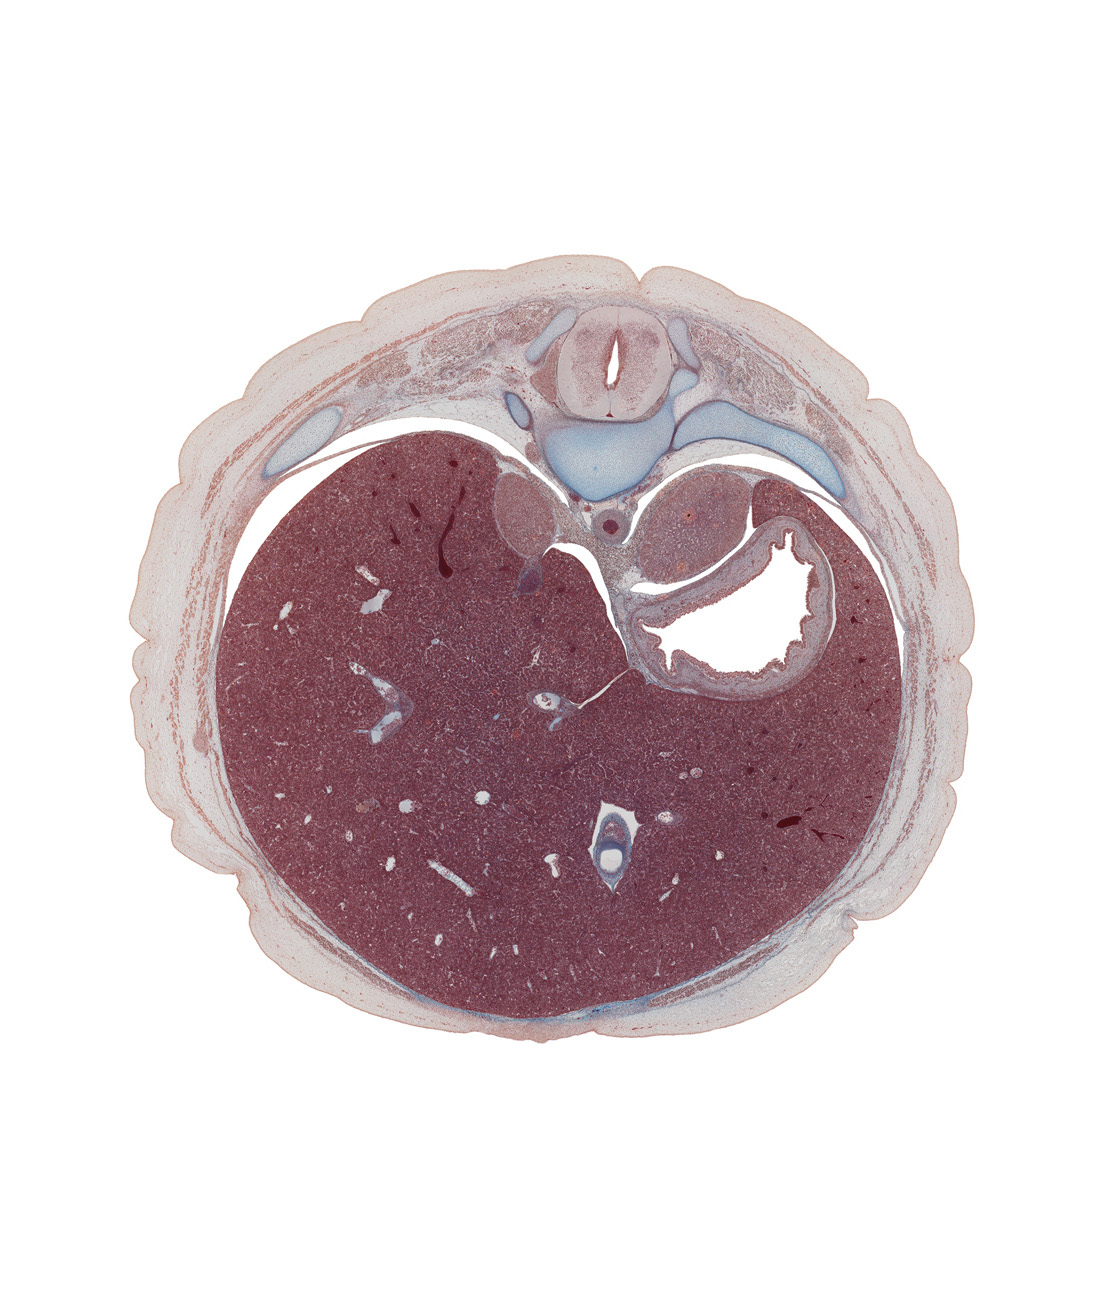 T-10 / T-11 interganglion region, aorta, central canal, diaphragm, dorsal horn of grey matter, dorsal mesogastrium, ductus venosus, gastric fold(s), inferior vena cava, lateral funiculus, lateral horn of grey matter, left lobe of liver, peritoneal cavity, rib 11, right lobe of liver, suprarenal gland, sympathetic trunk, ventral funiculus, ventral horn of grey matter